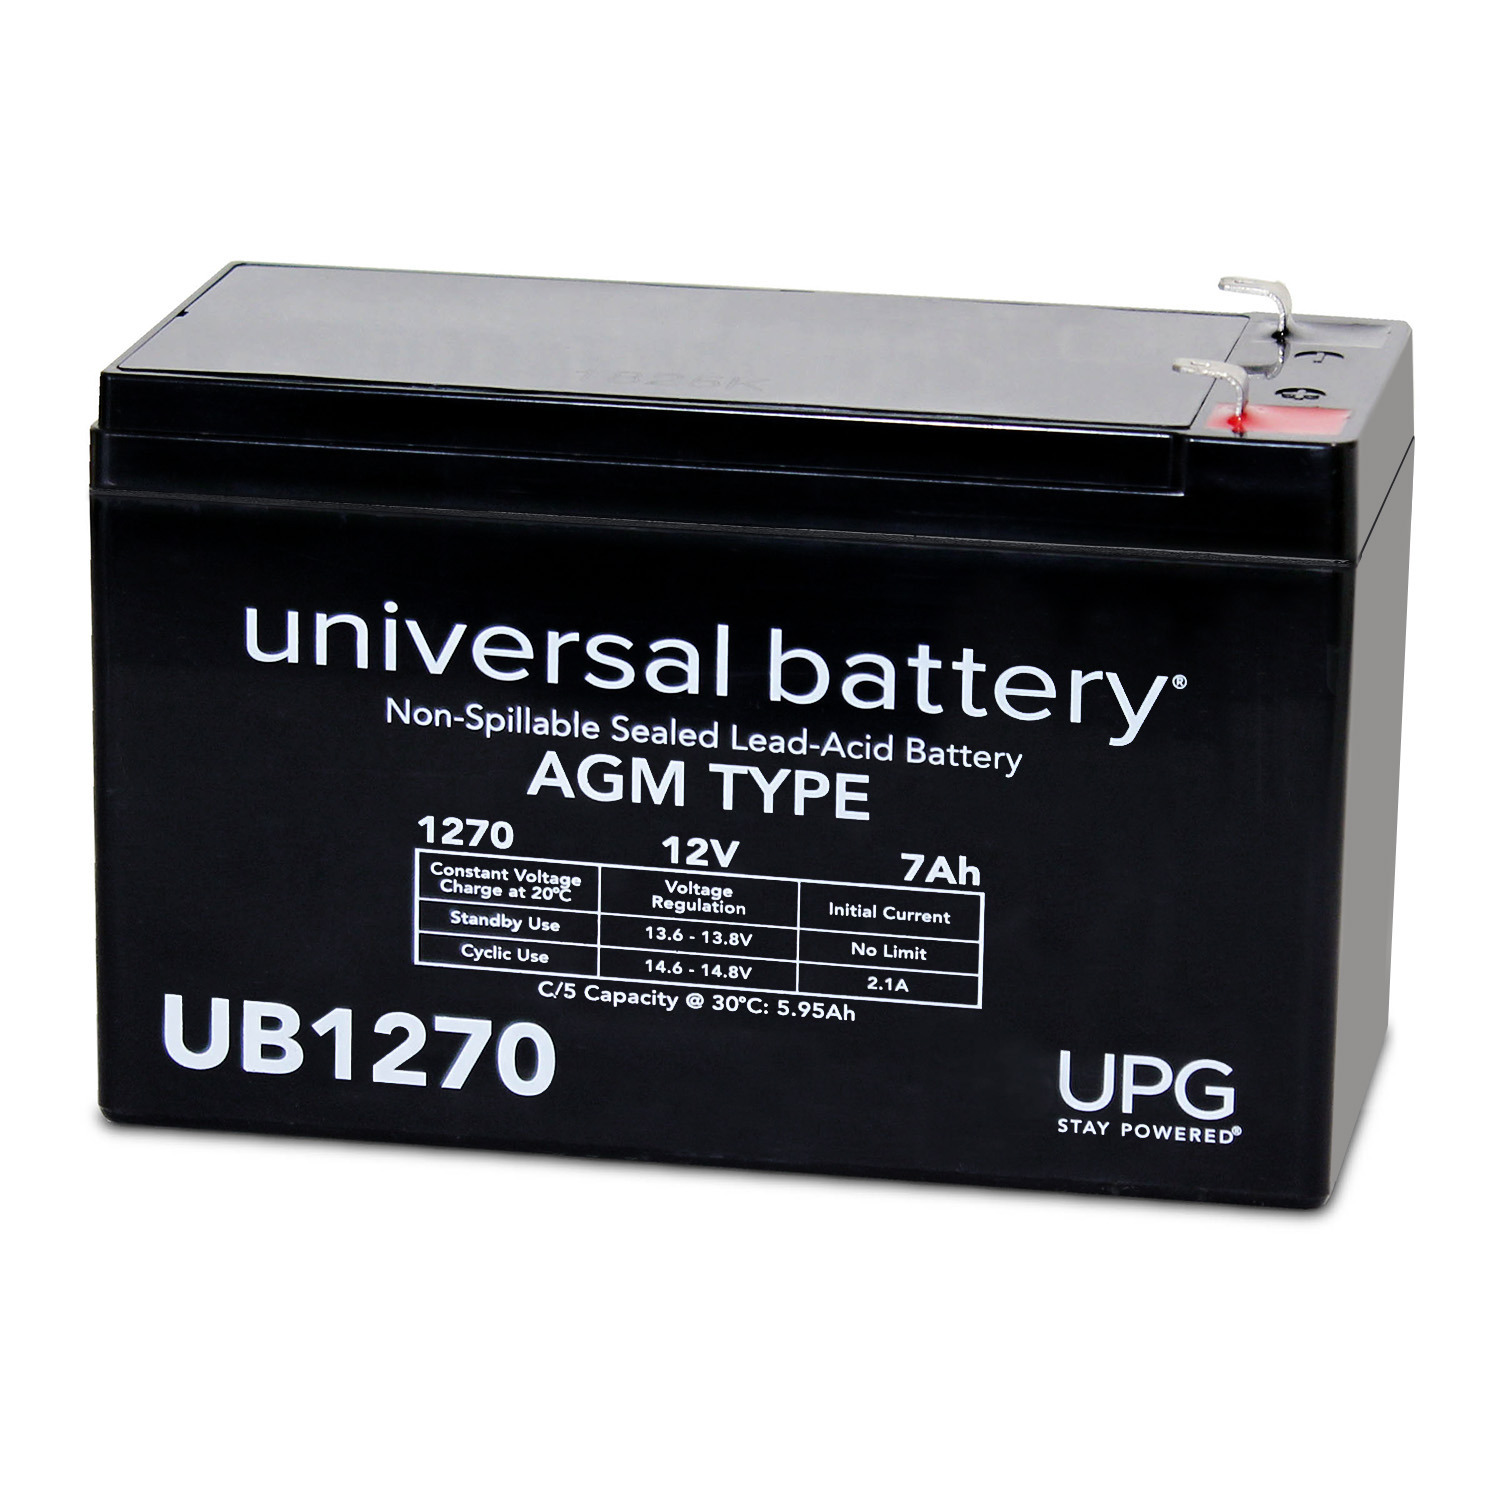 Universal Battery UB1270 Replacement Rhino Battery - image 1 of 6